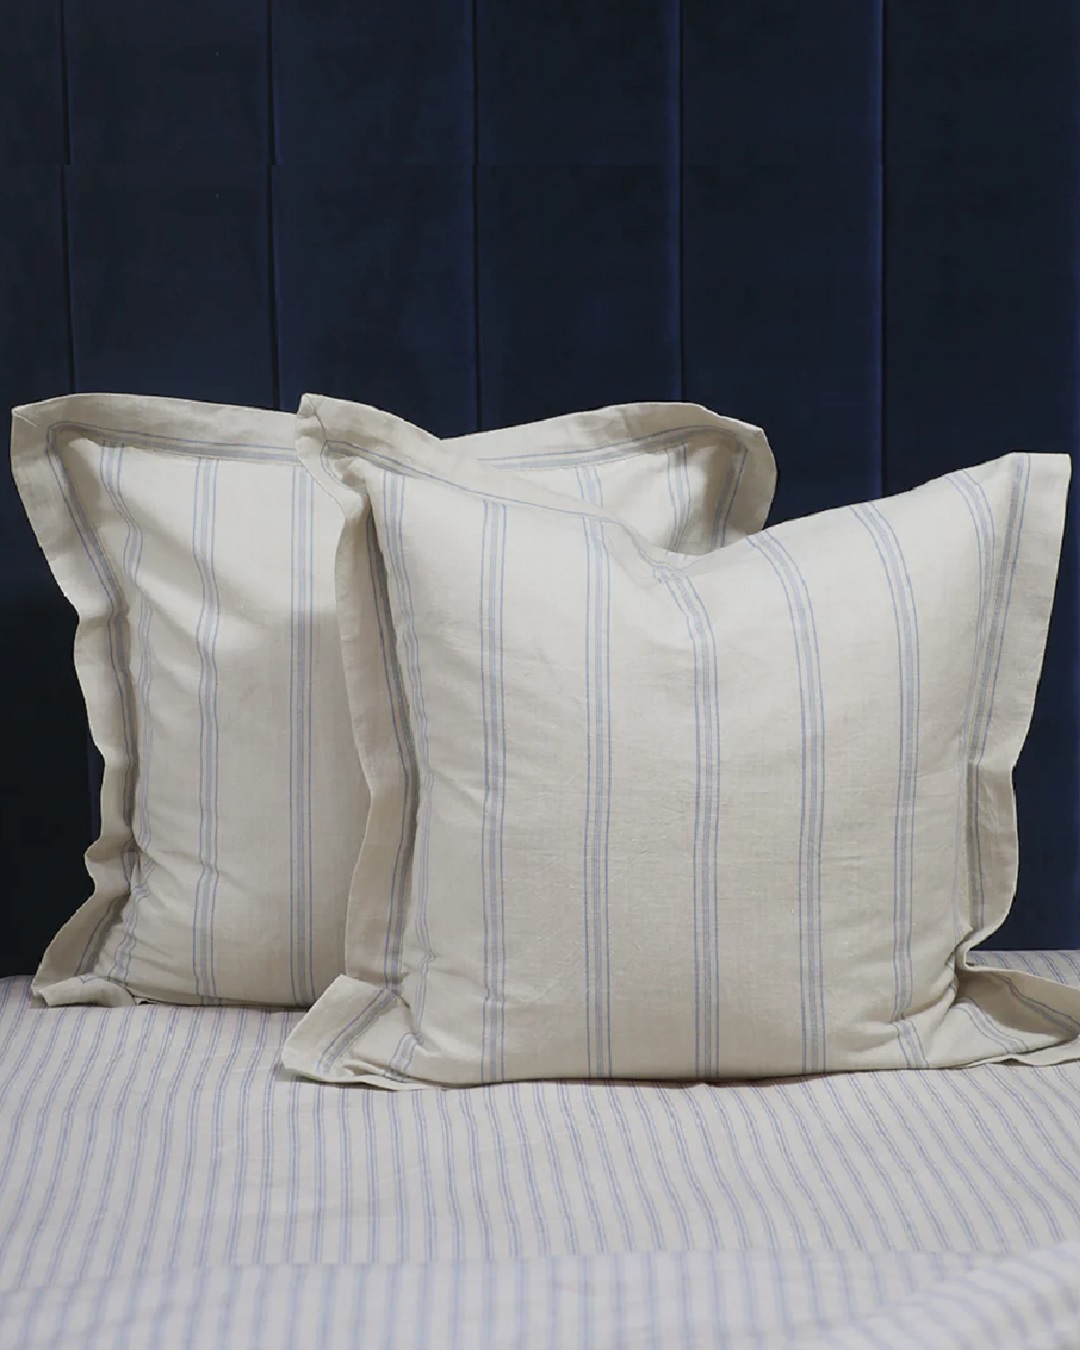 Striped blue and white euro pillows